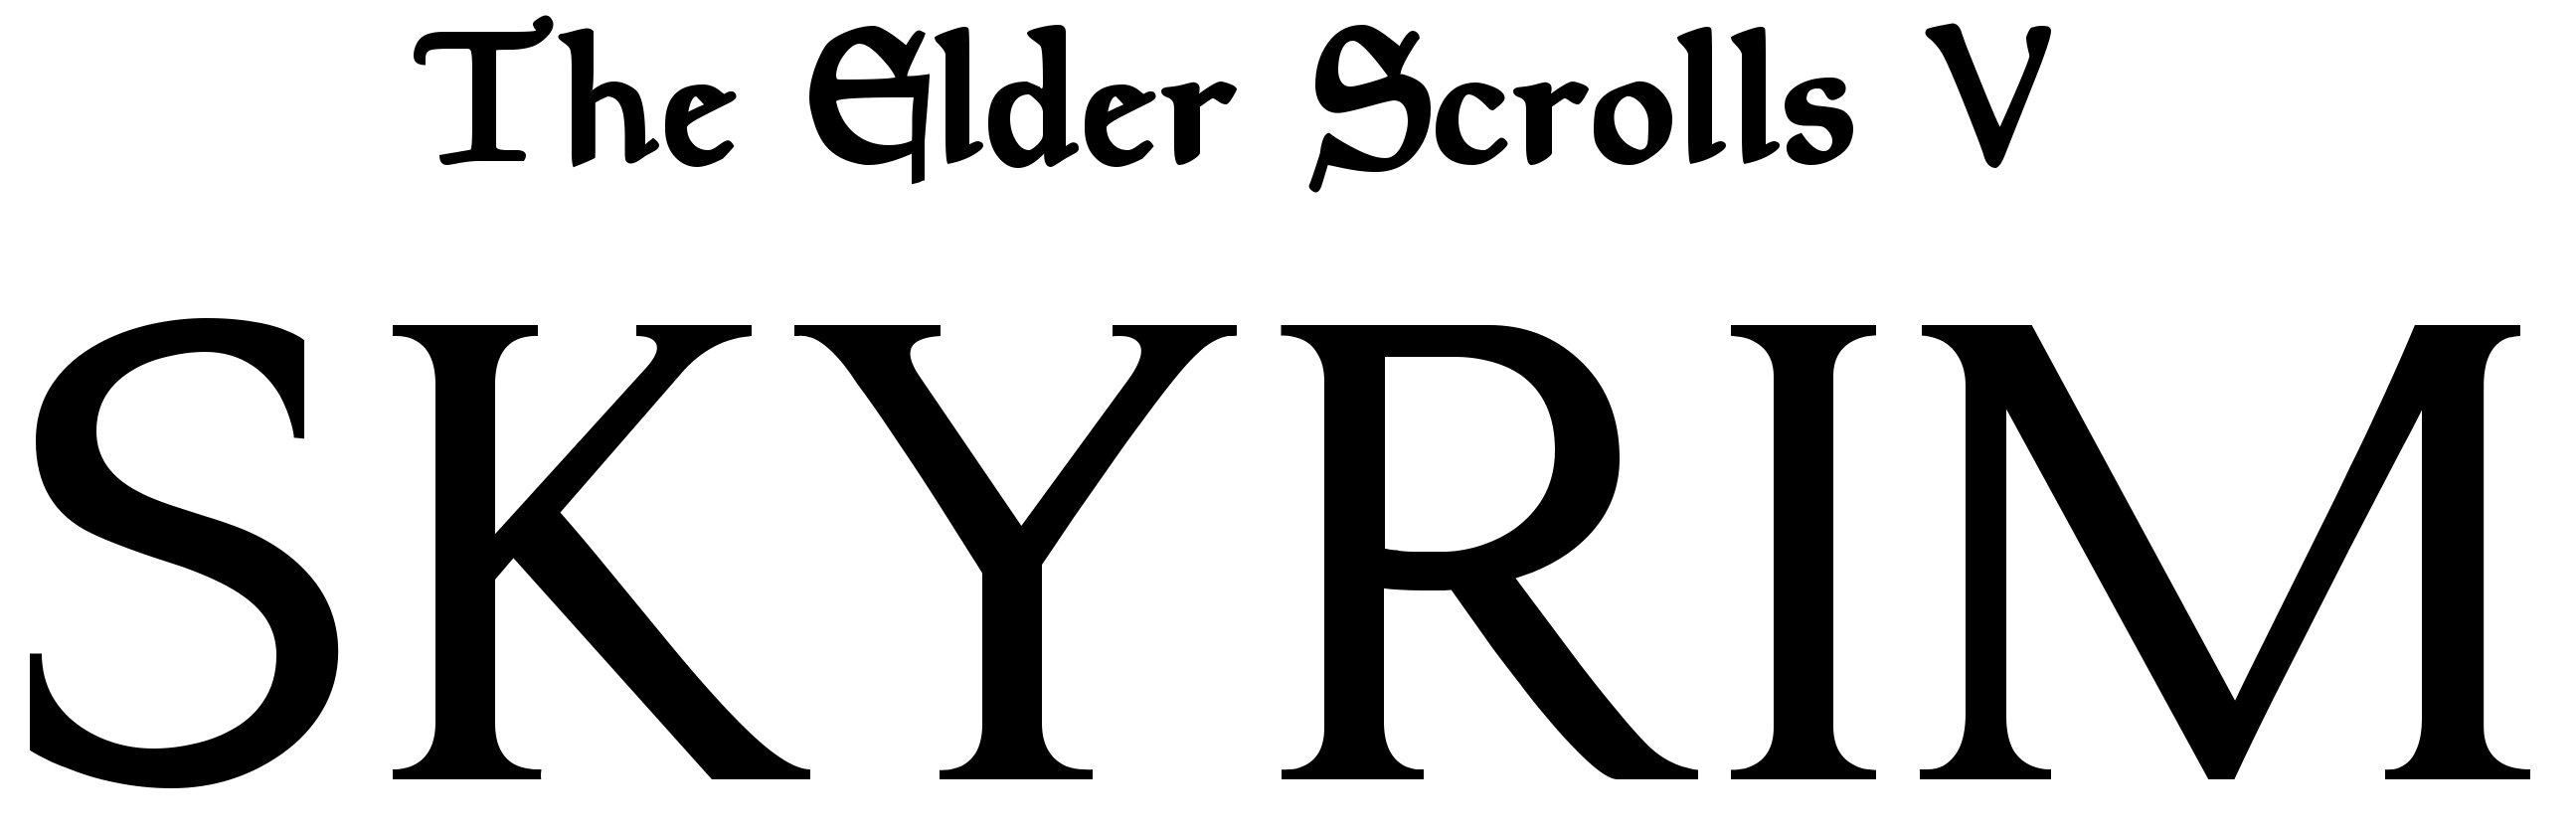 The Elder Scrolls V Skyrim Logo Transparent Image